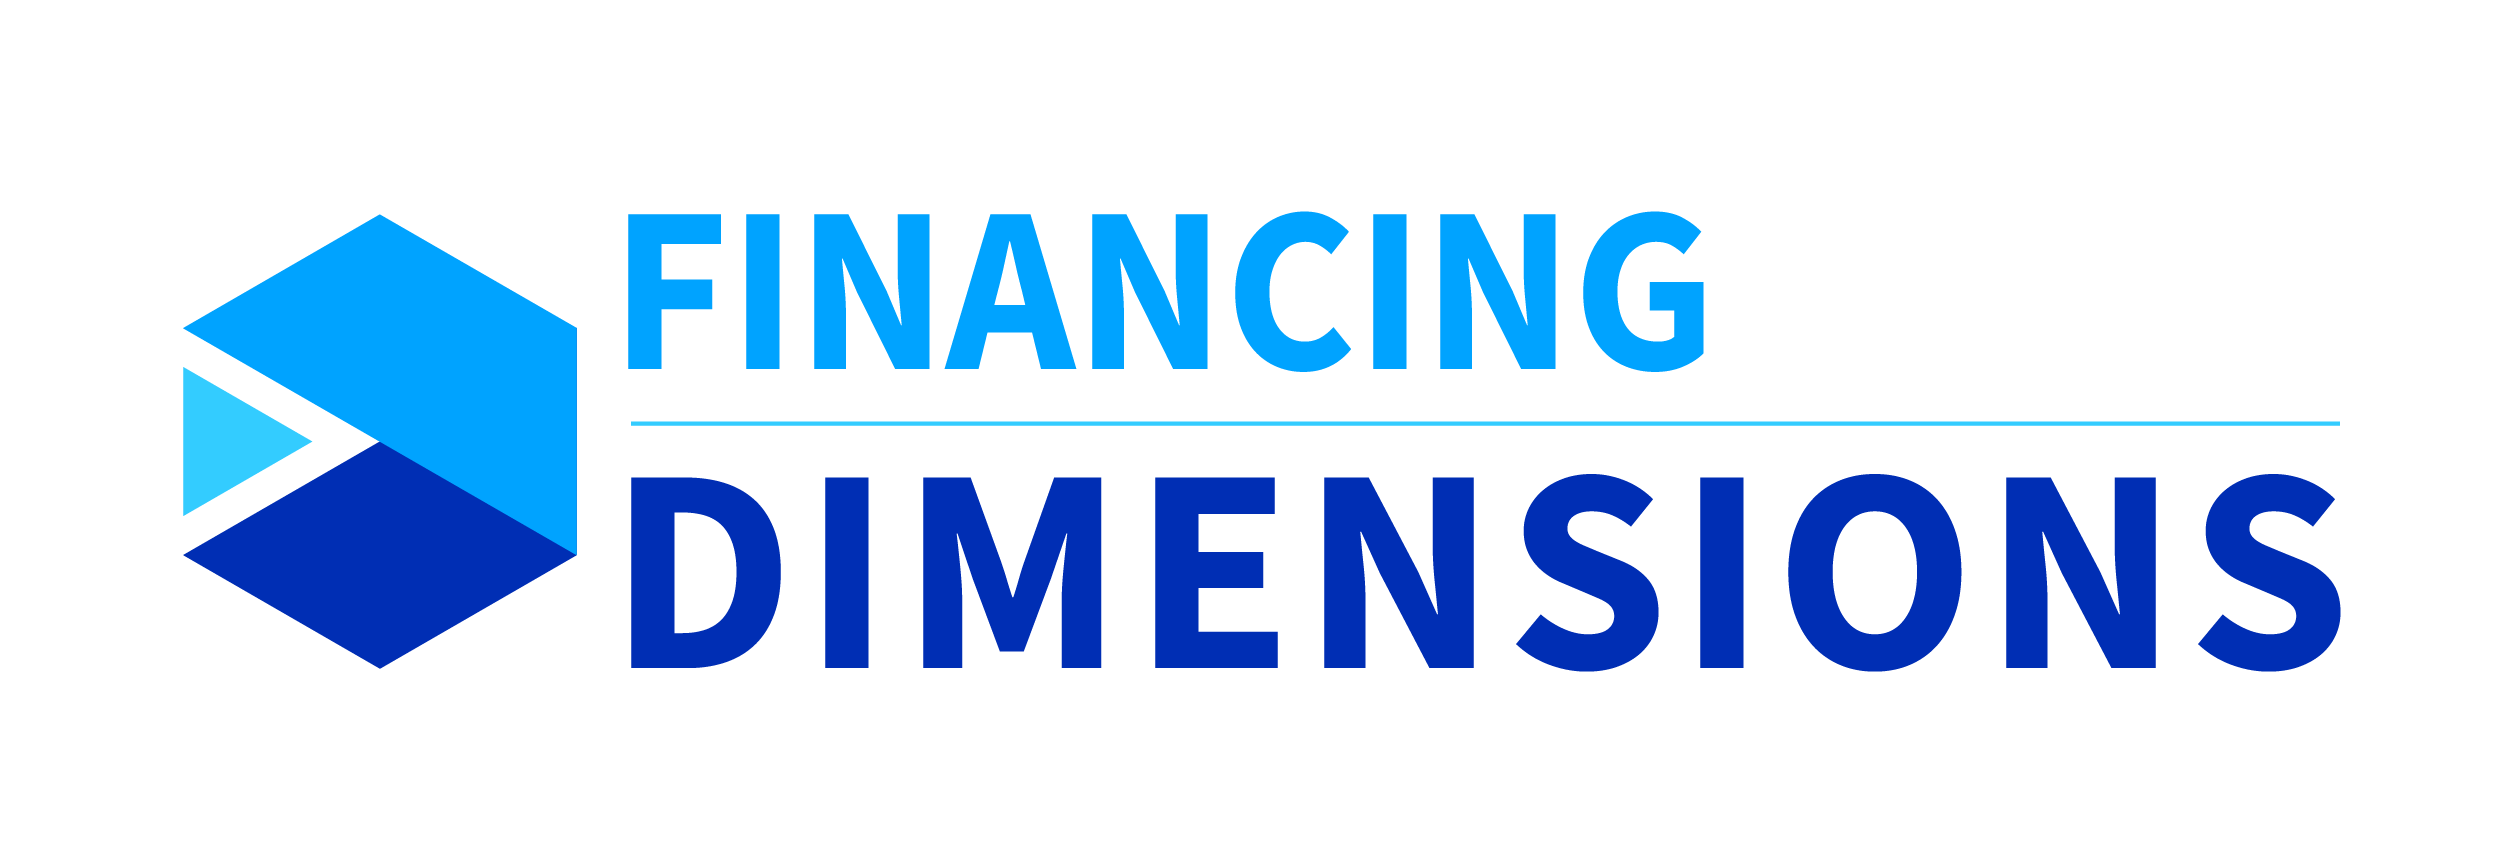 Acceltech Pte Ltd - Financing Dimensions